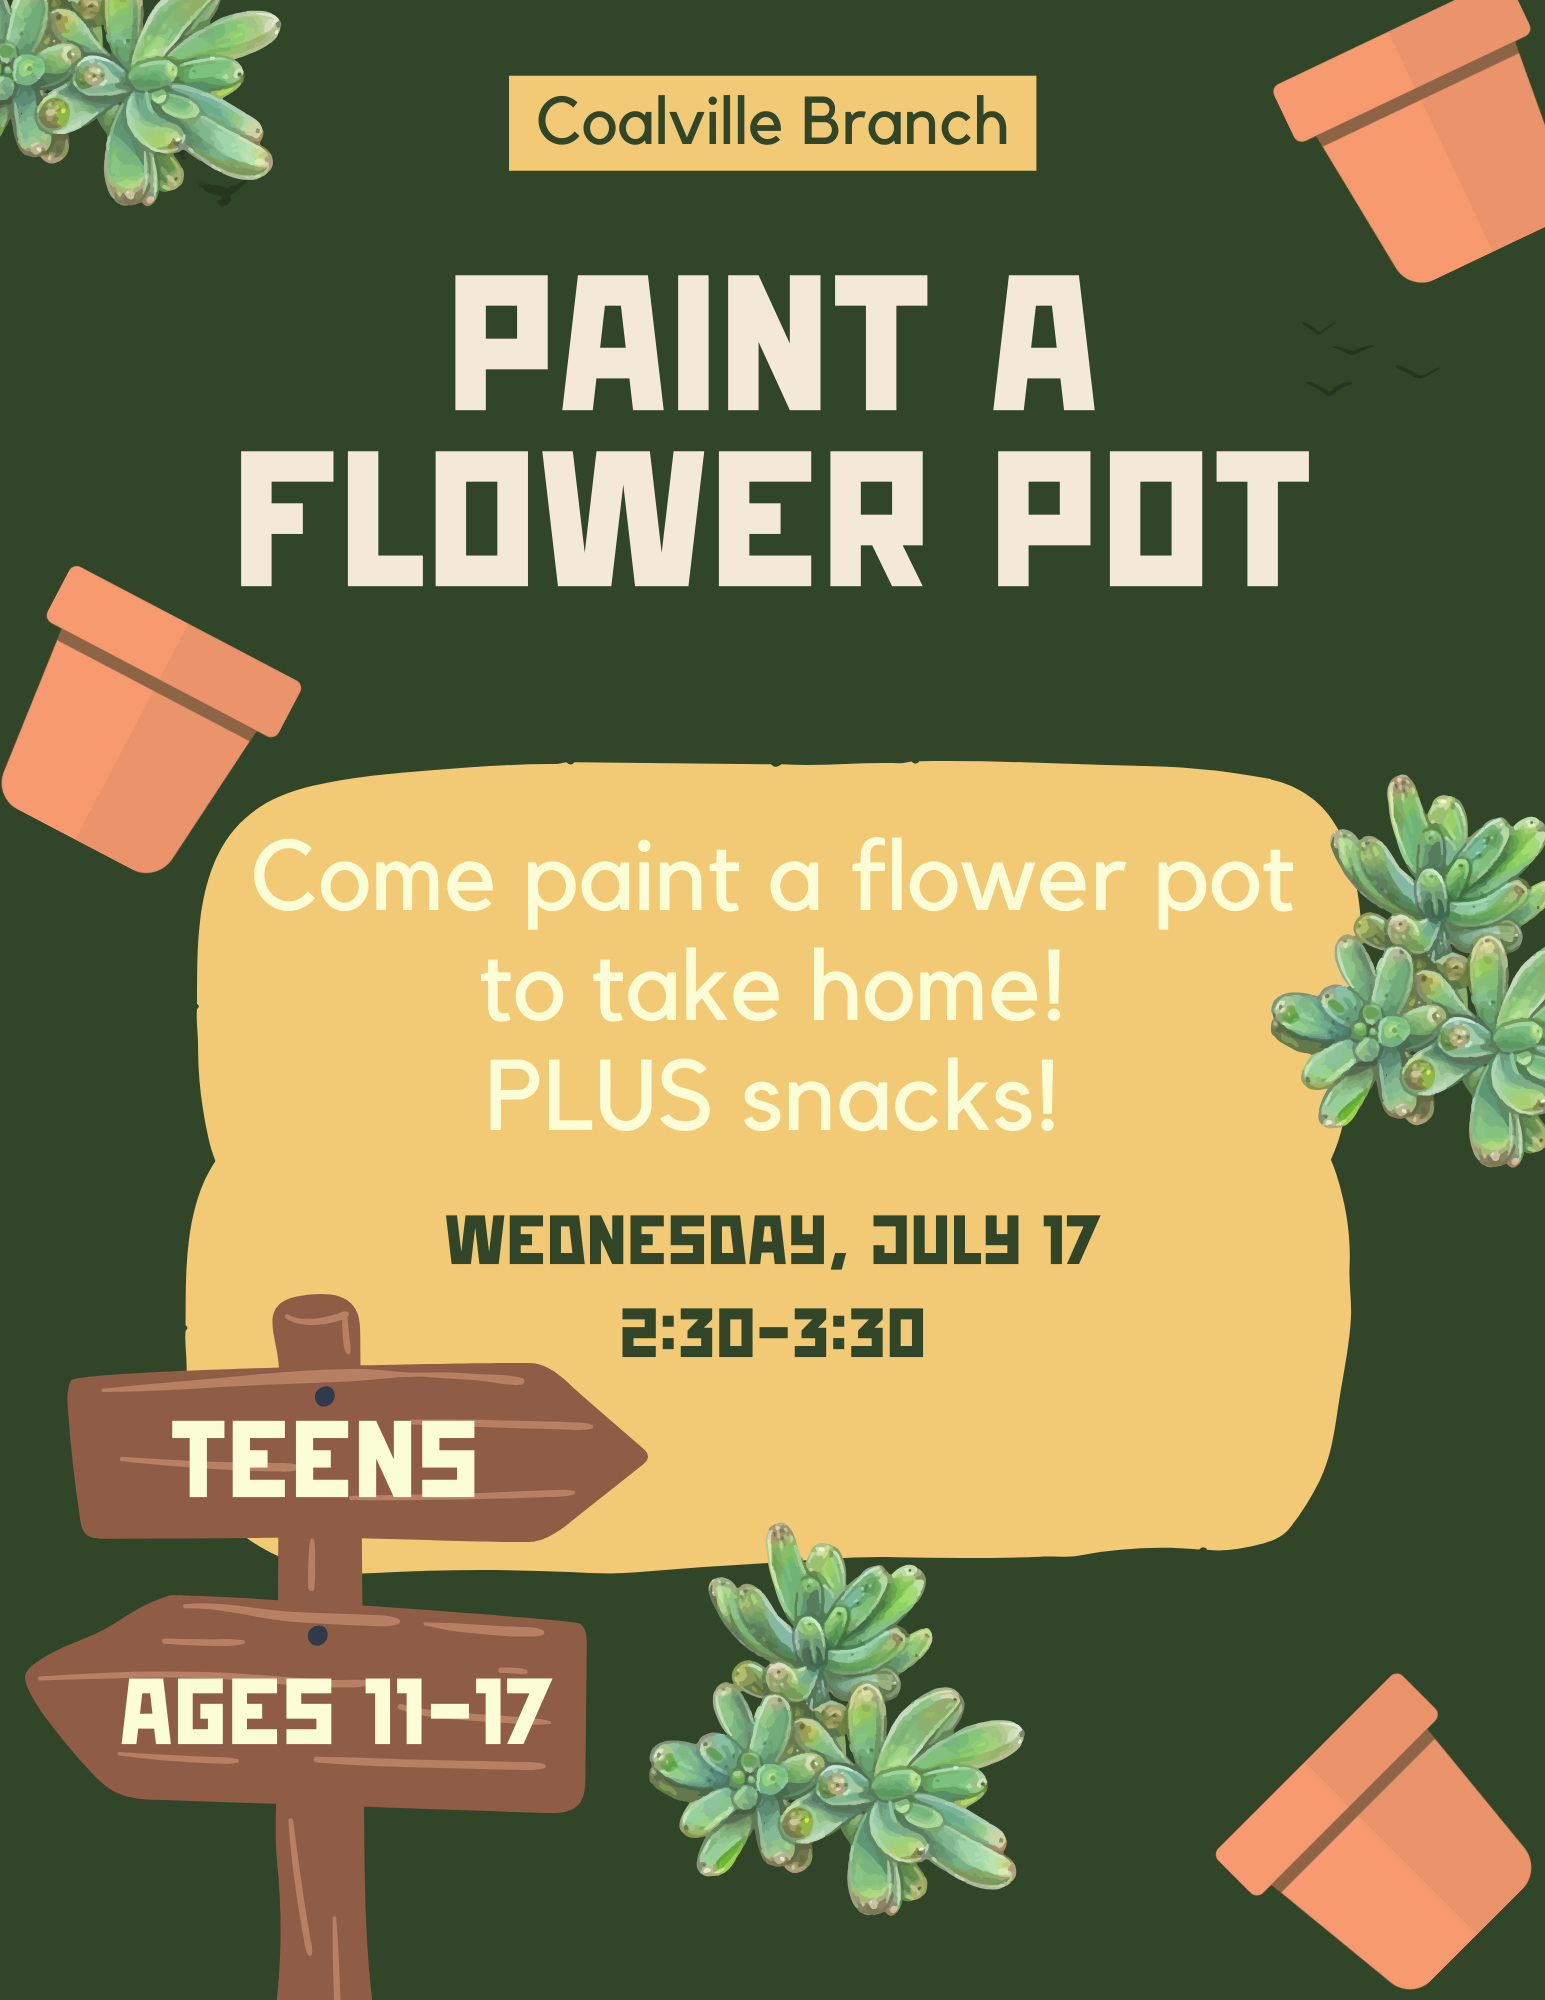 Teen Flower Pot Painting at Coalville!